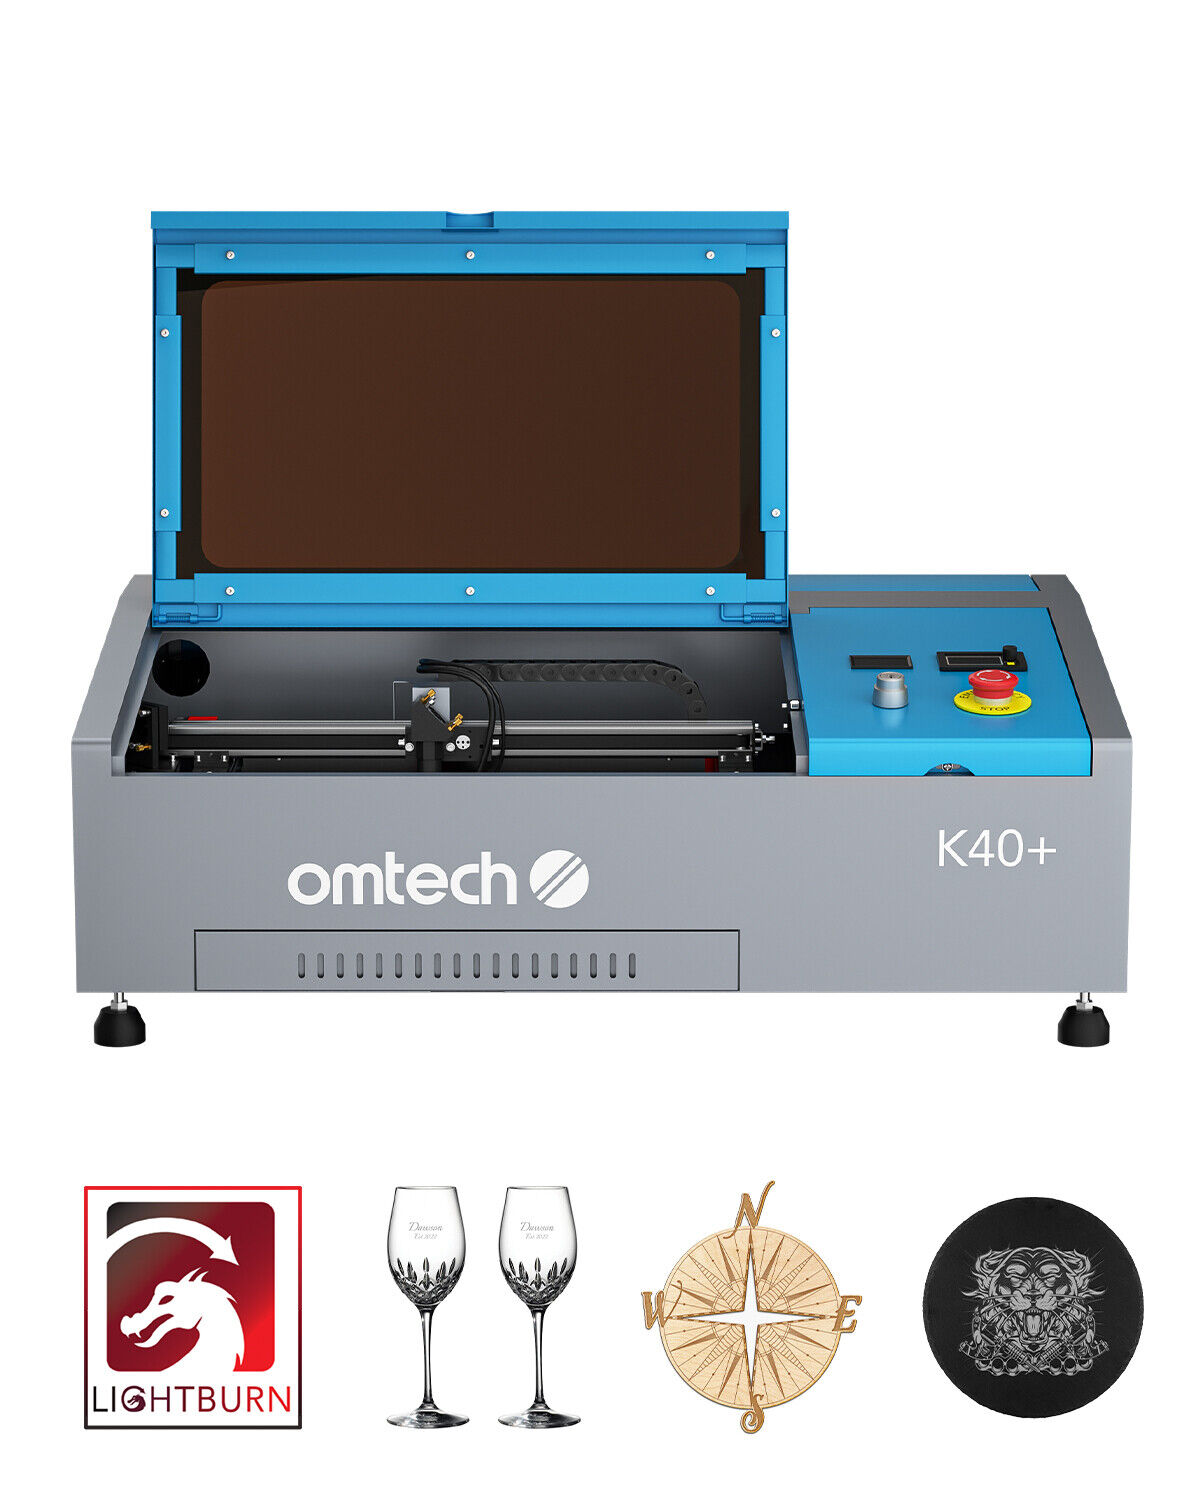 OMTech 40W K40+ CO2 Laser Engraver Engraving Machine with LightBurn License Key